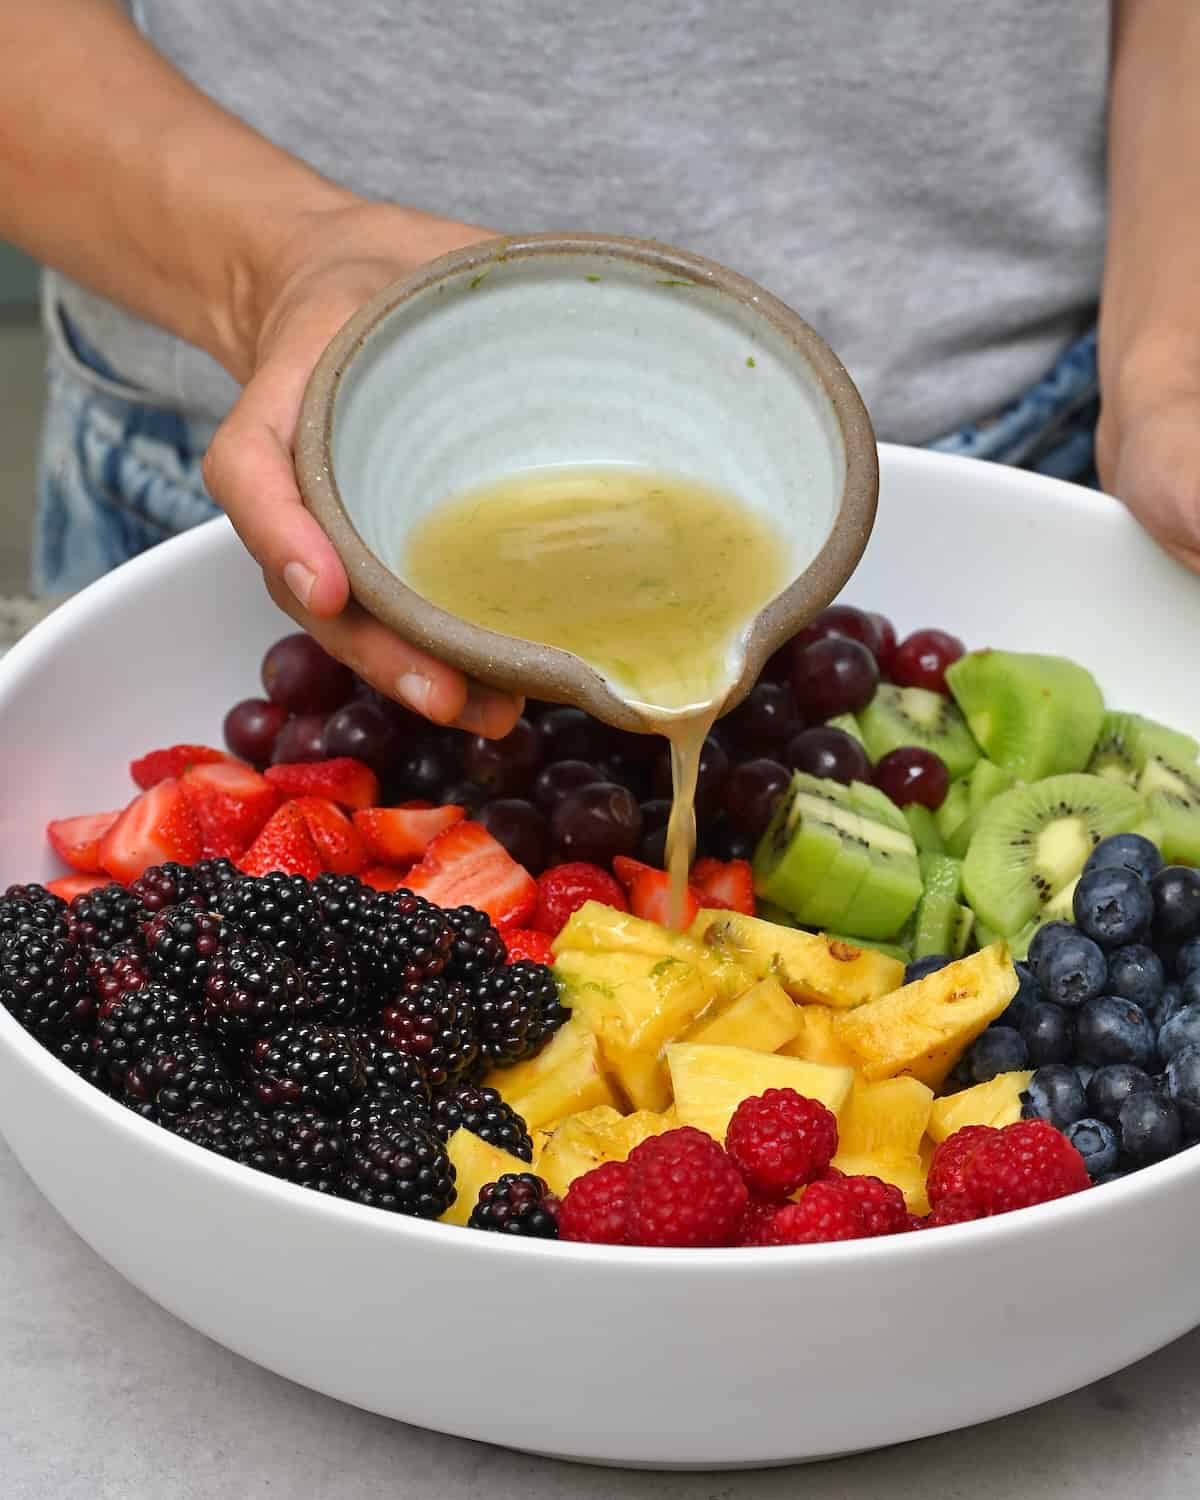 Pouring salad dressing over fruit